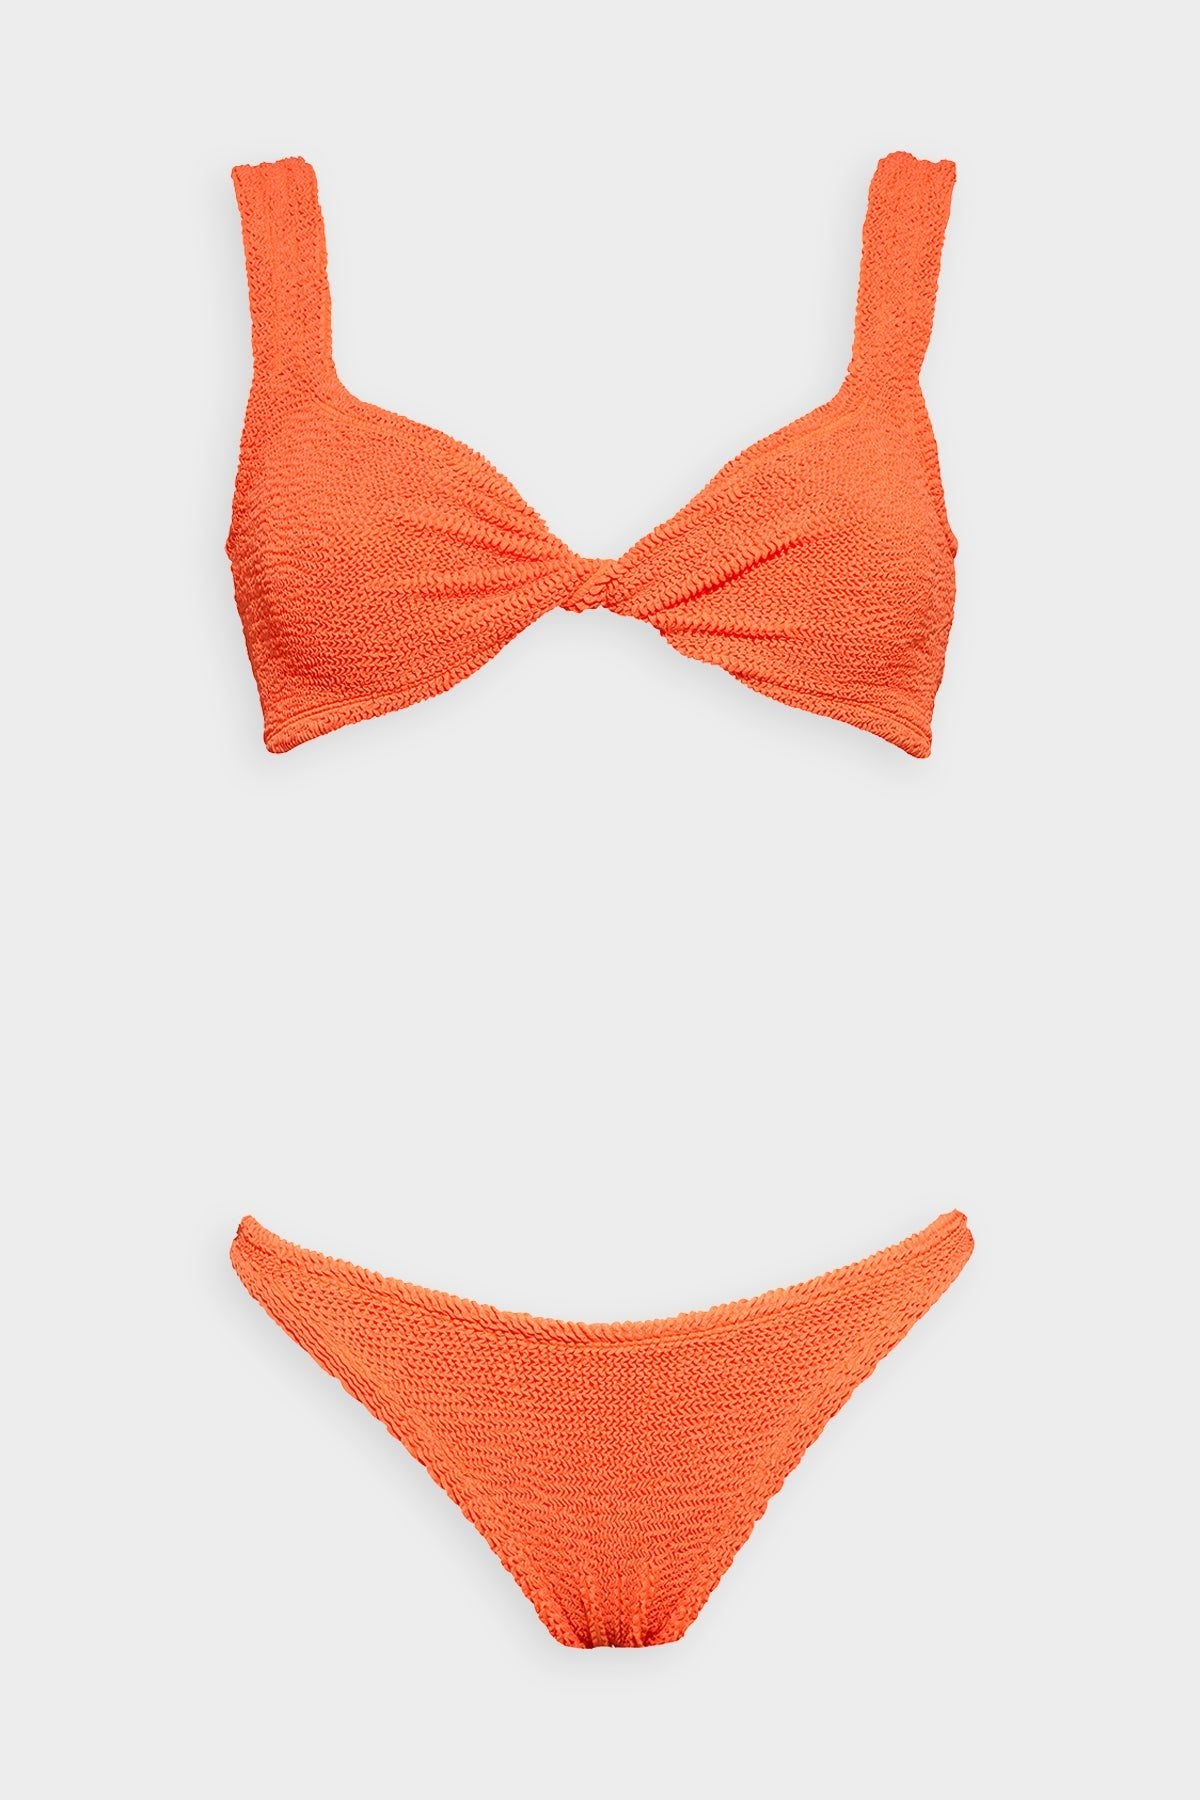 Juno Bikini in Orange - shop-olivia.com